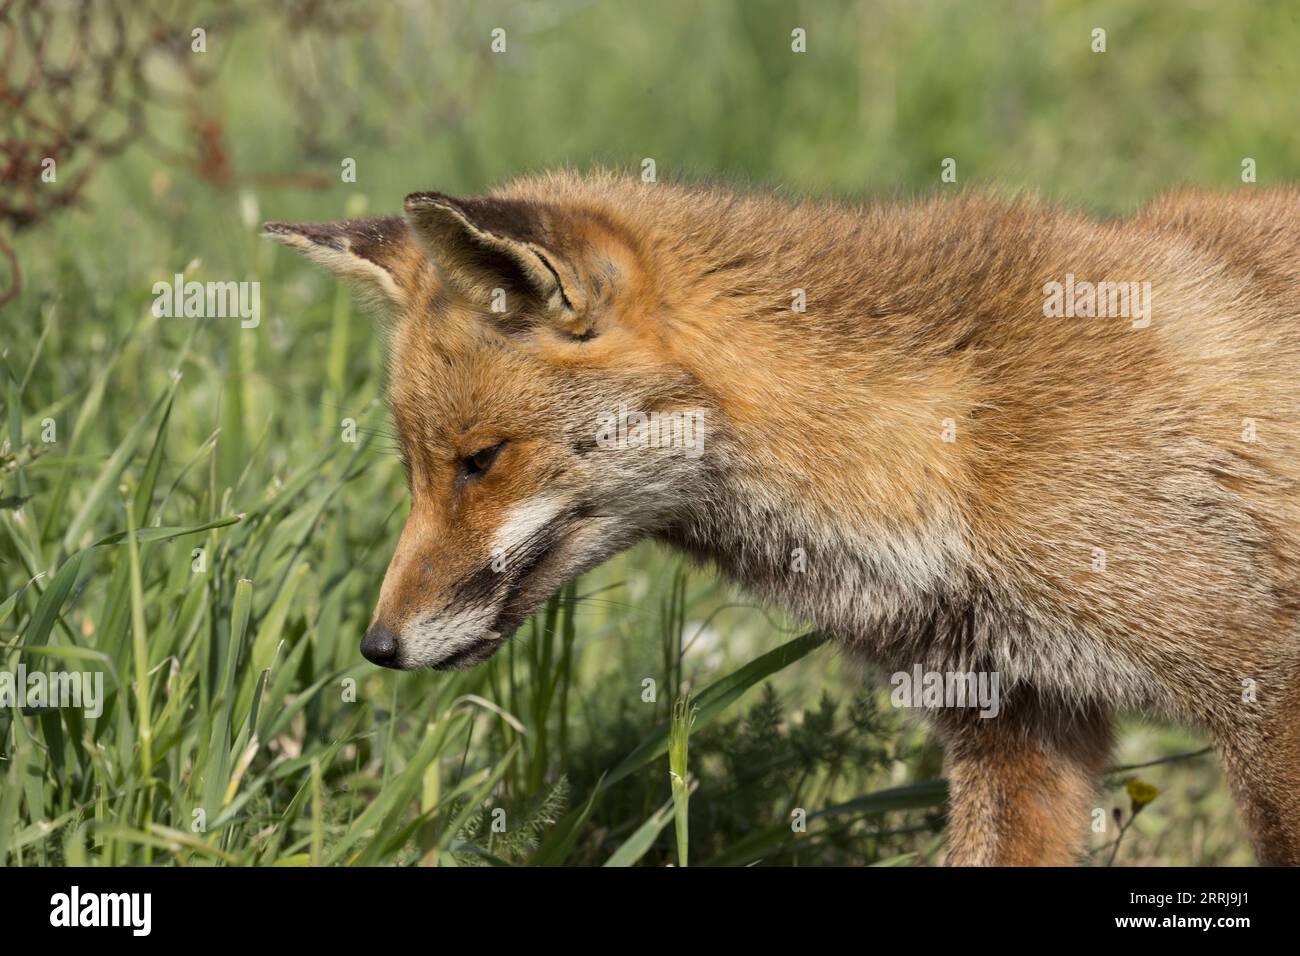 Fox maremman national park Italy wild wildlife Stock Photo